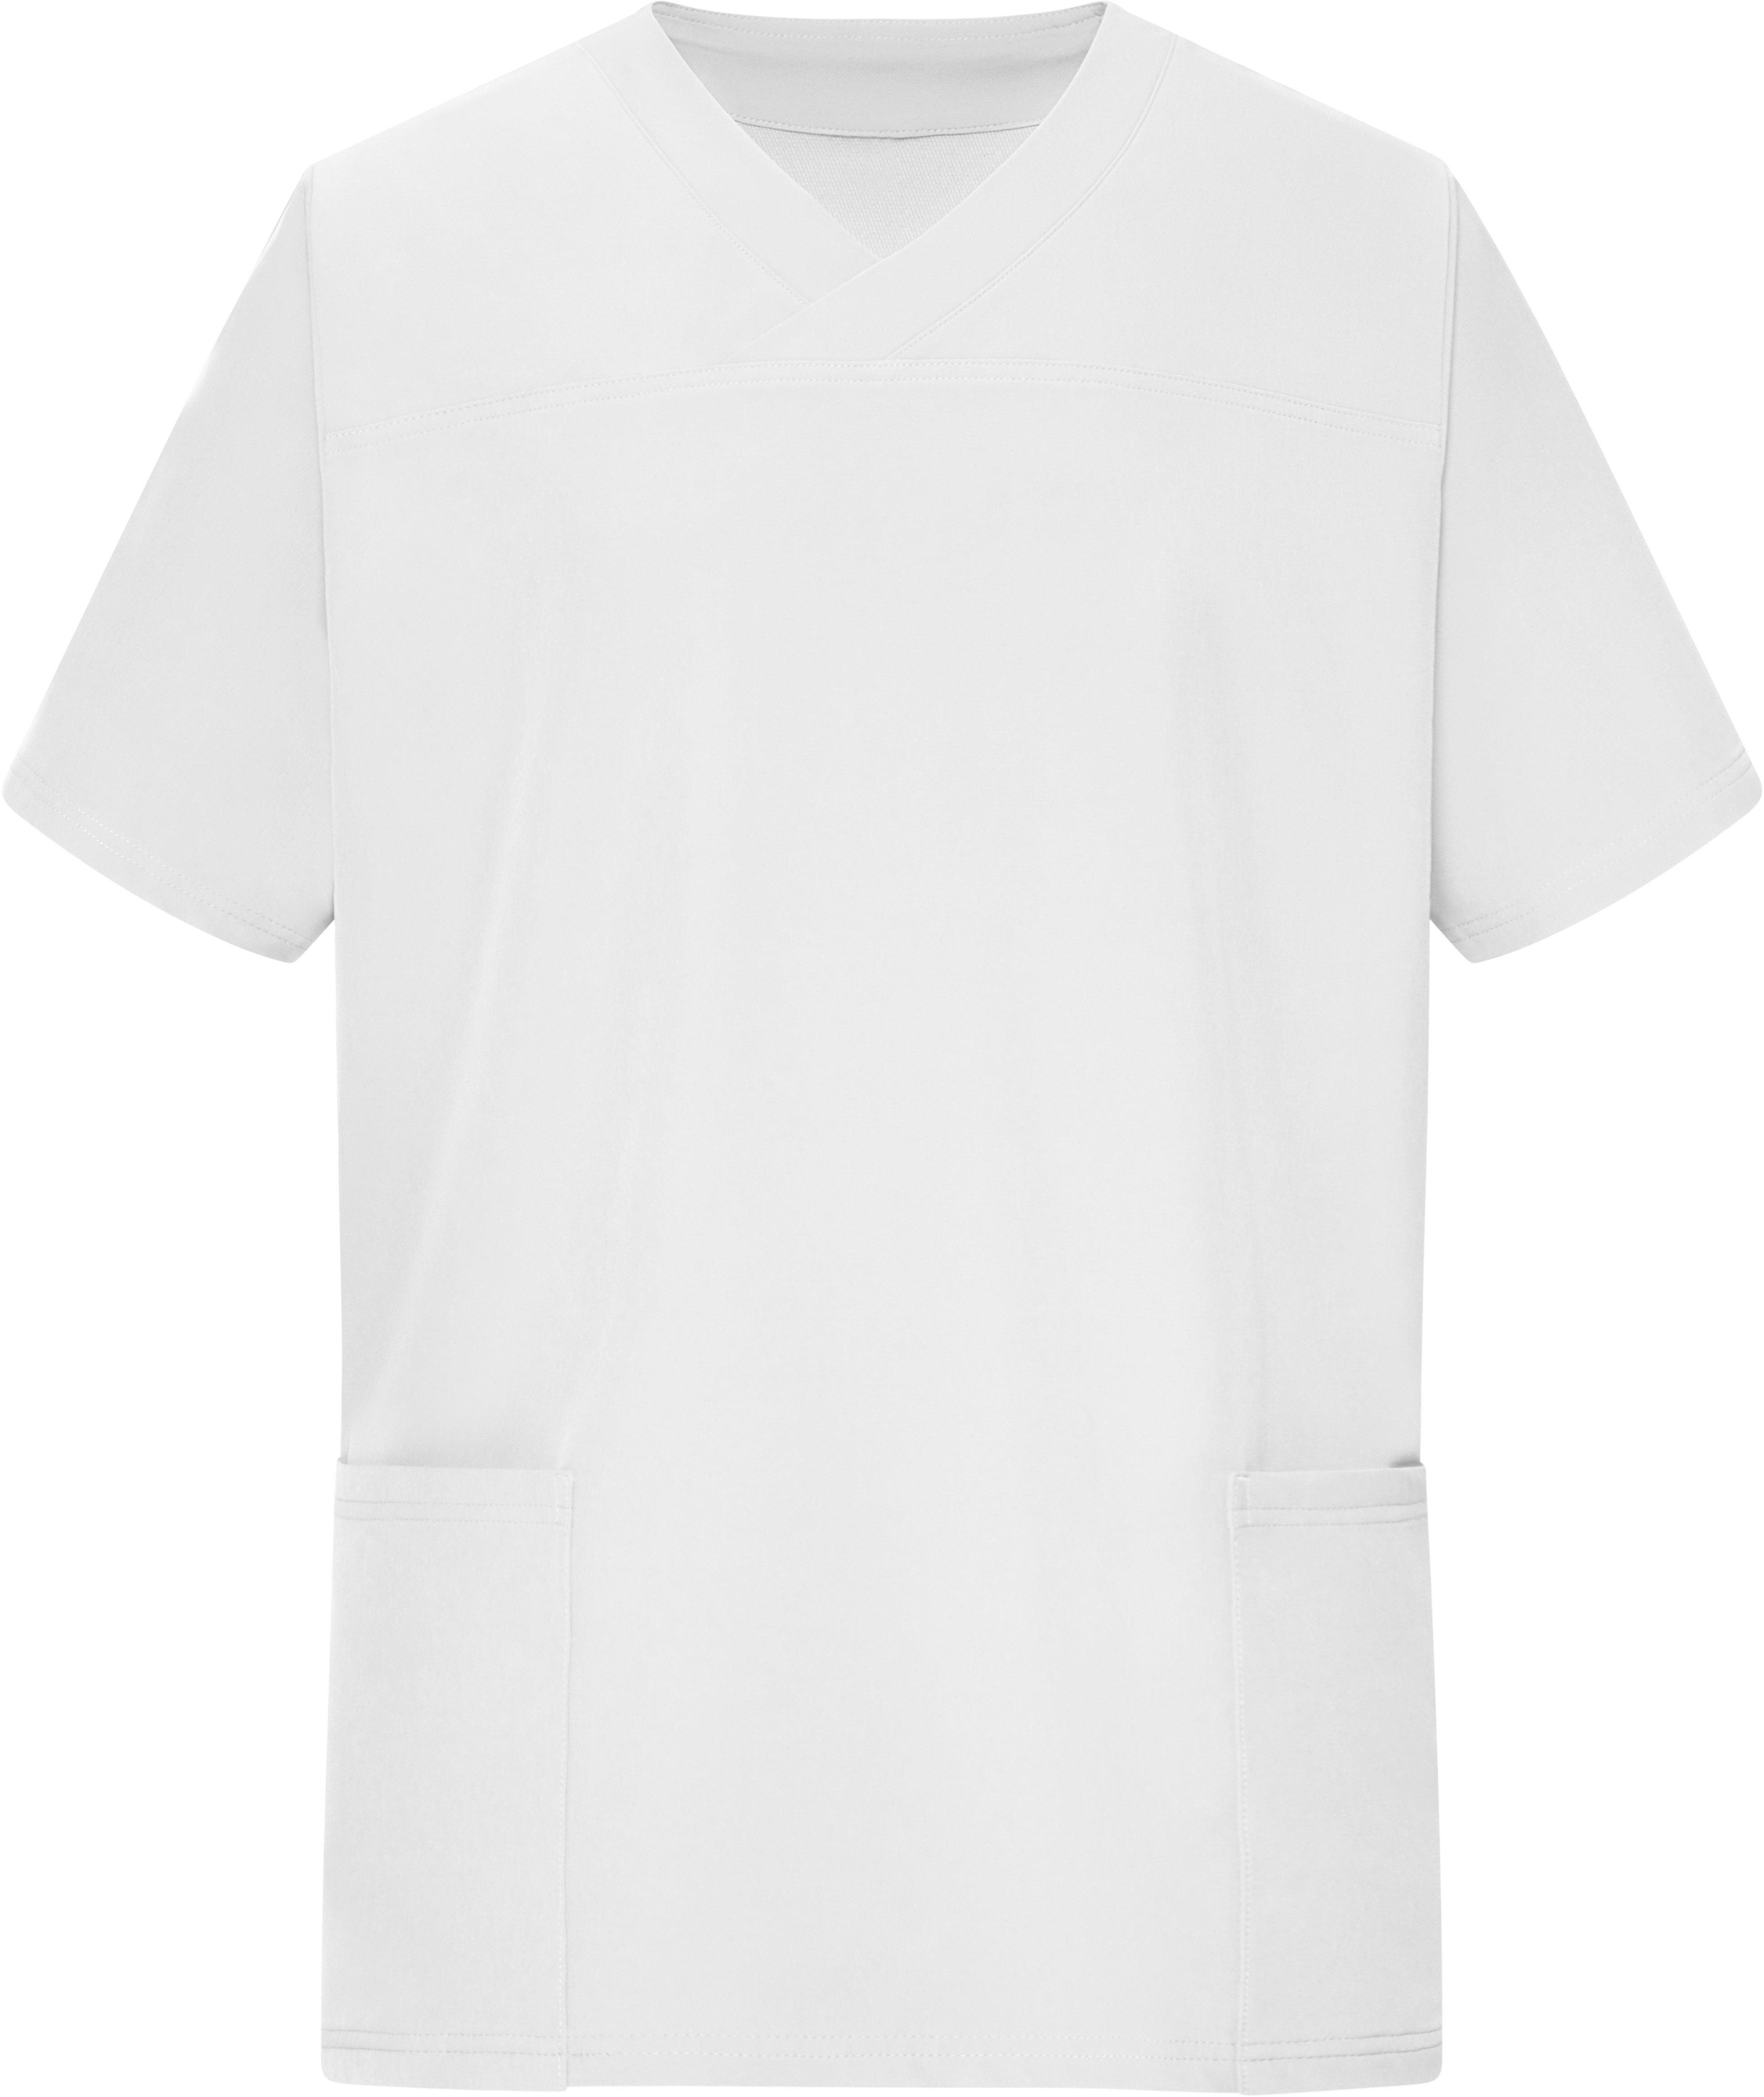 Pánská elastická tunika s výstřihem do V JN 3104 Barva: bílá, Velikost: M